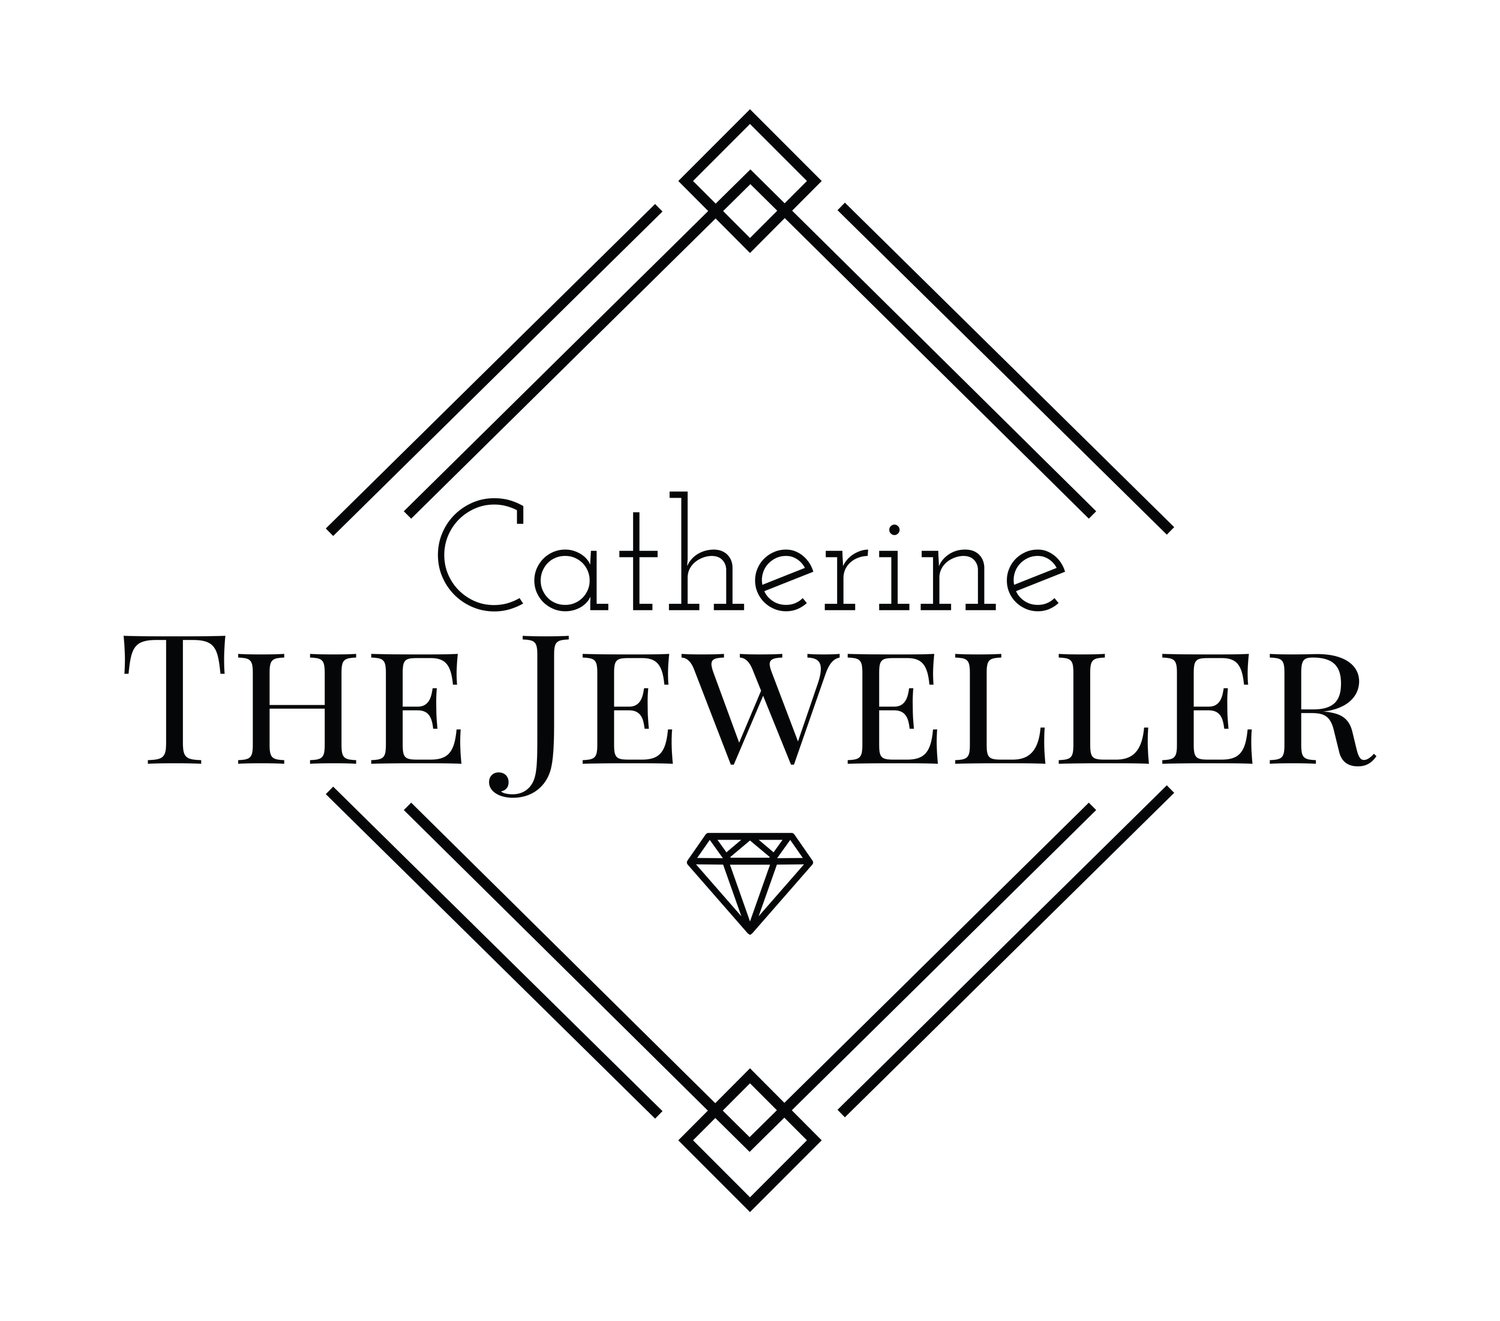 Catherine the Jeweller